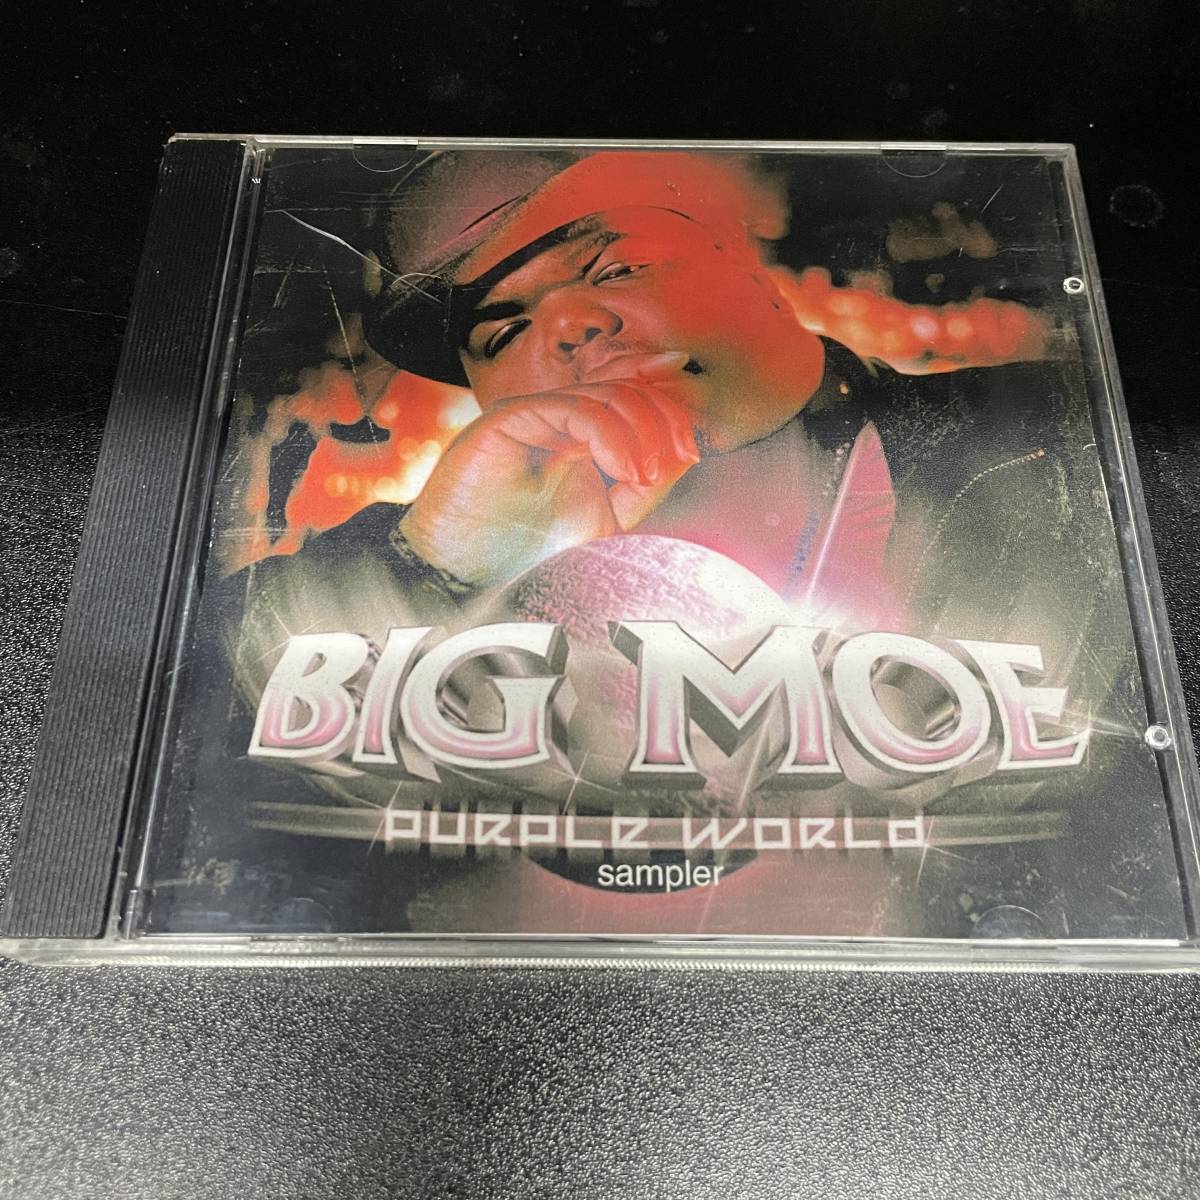 ● HIPHOP,R&B BIG MOE - SAMPLER シングル, 2002, PROMO CD 中古品_画像1